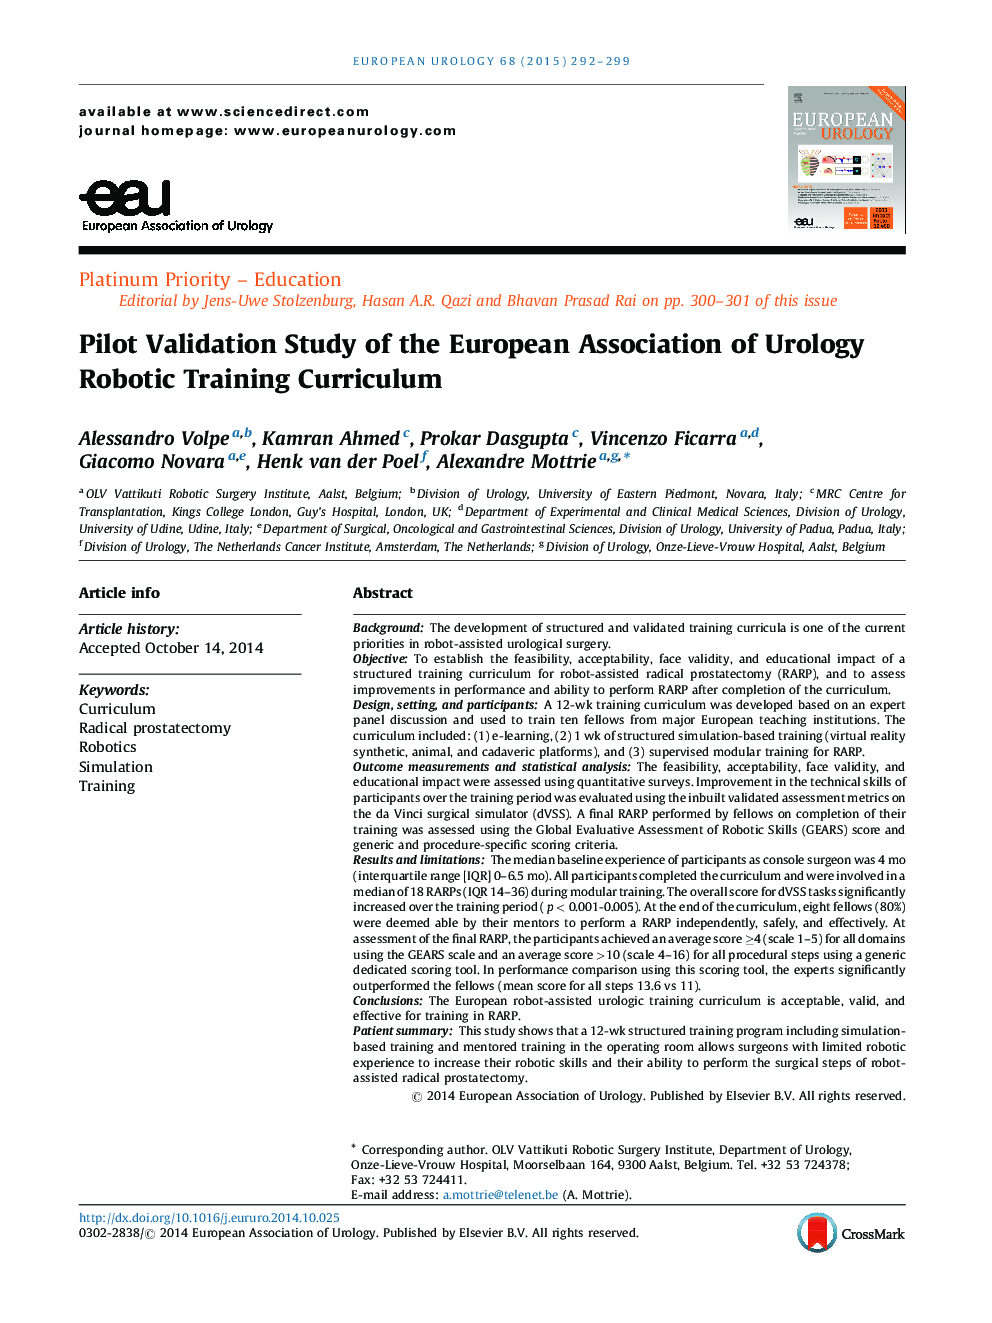 Pilot Validation Study of the European Association of Urology Robotic Training Curriculum